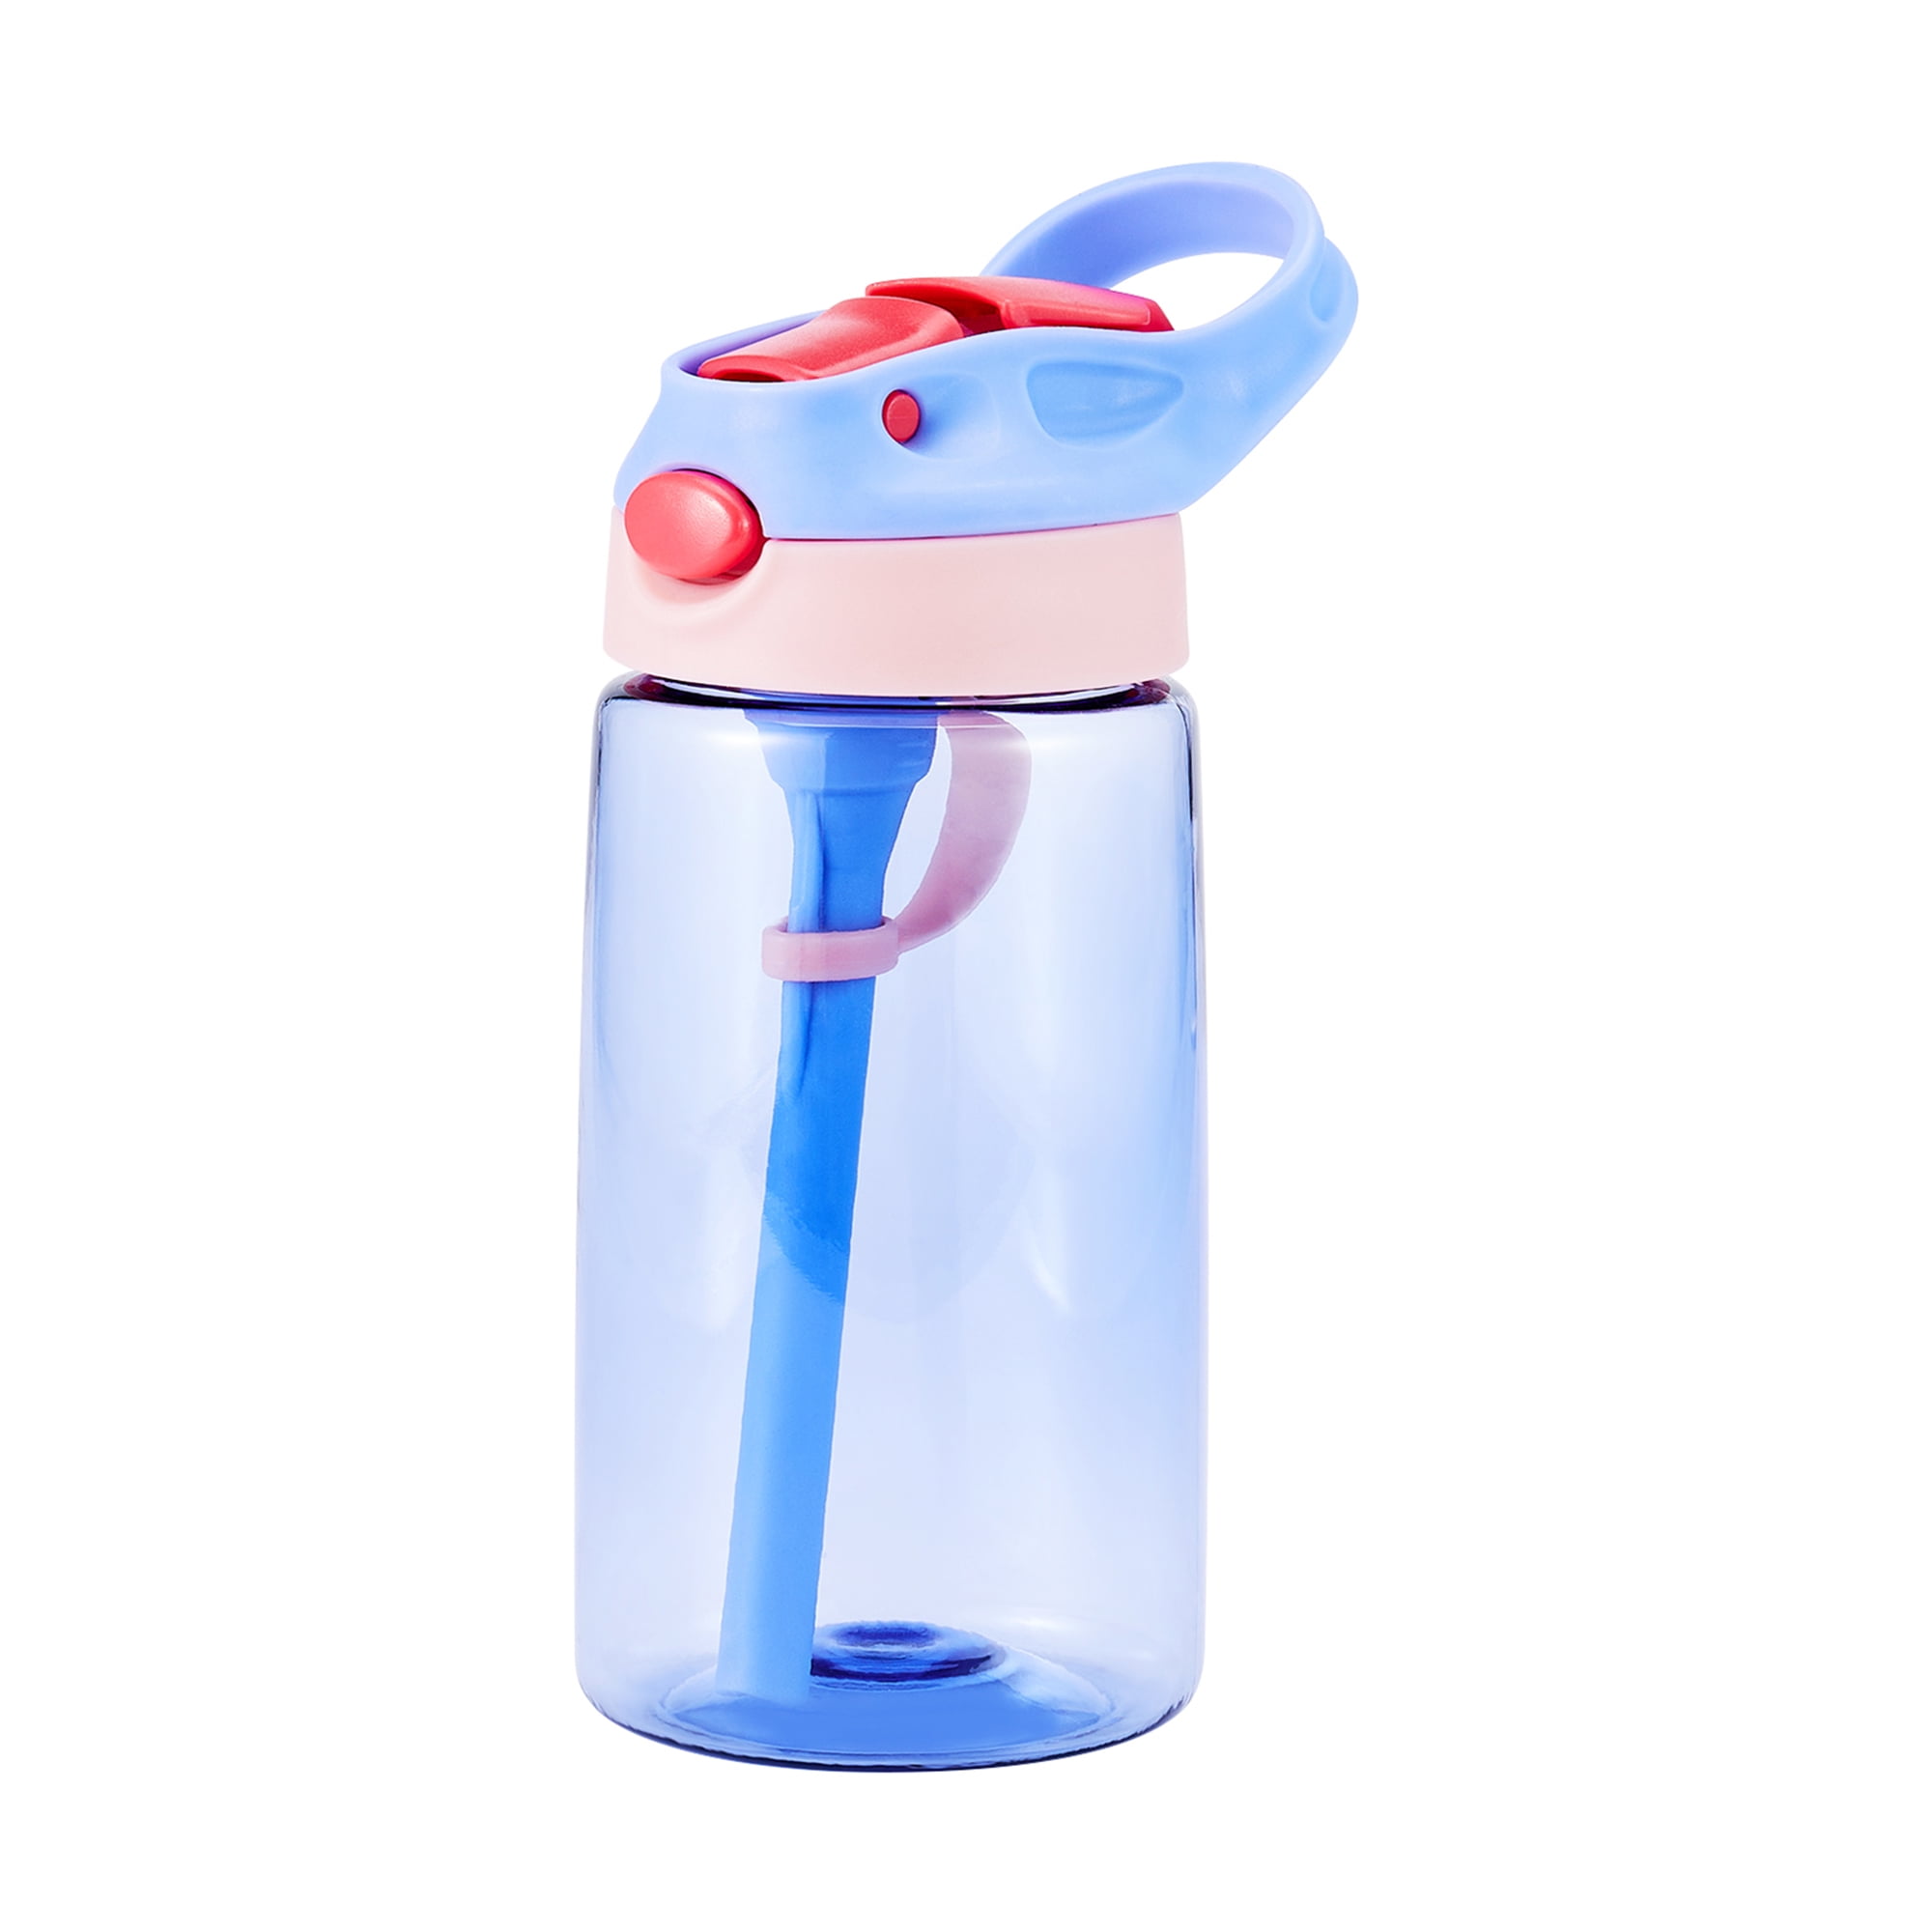 Oldley 15 fl oz Kids Water Bottle for School with 2 Lids (Straw/Chug) Girls  Bottle